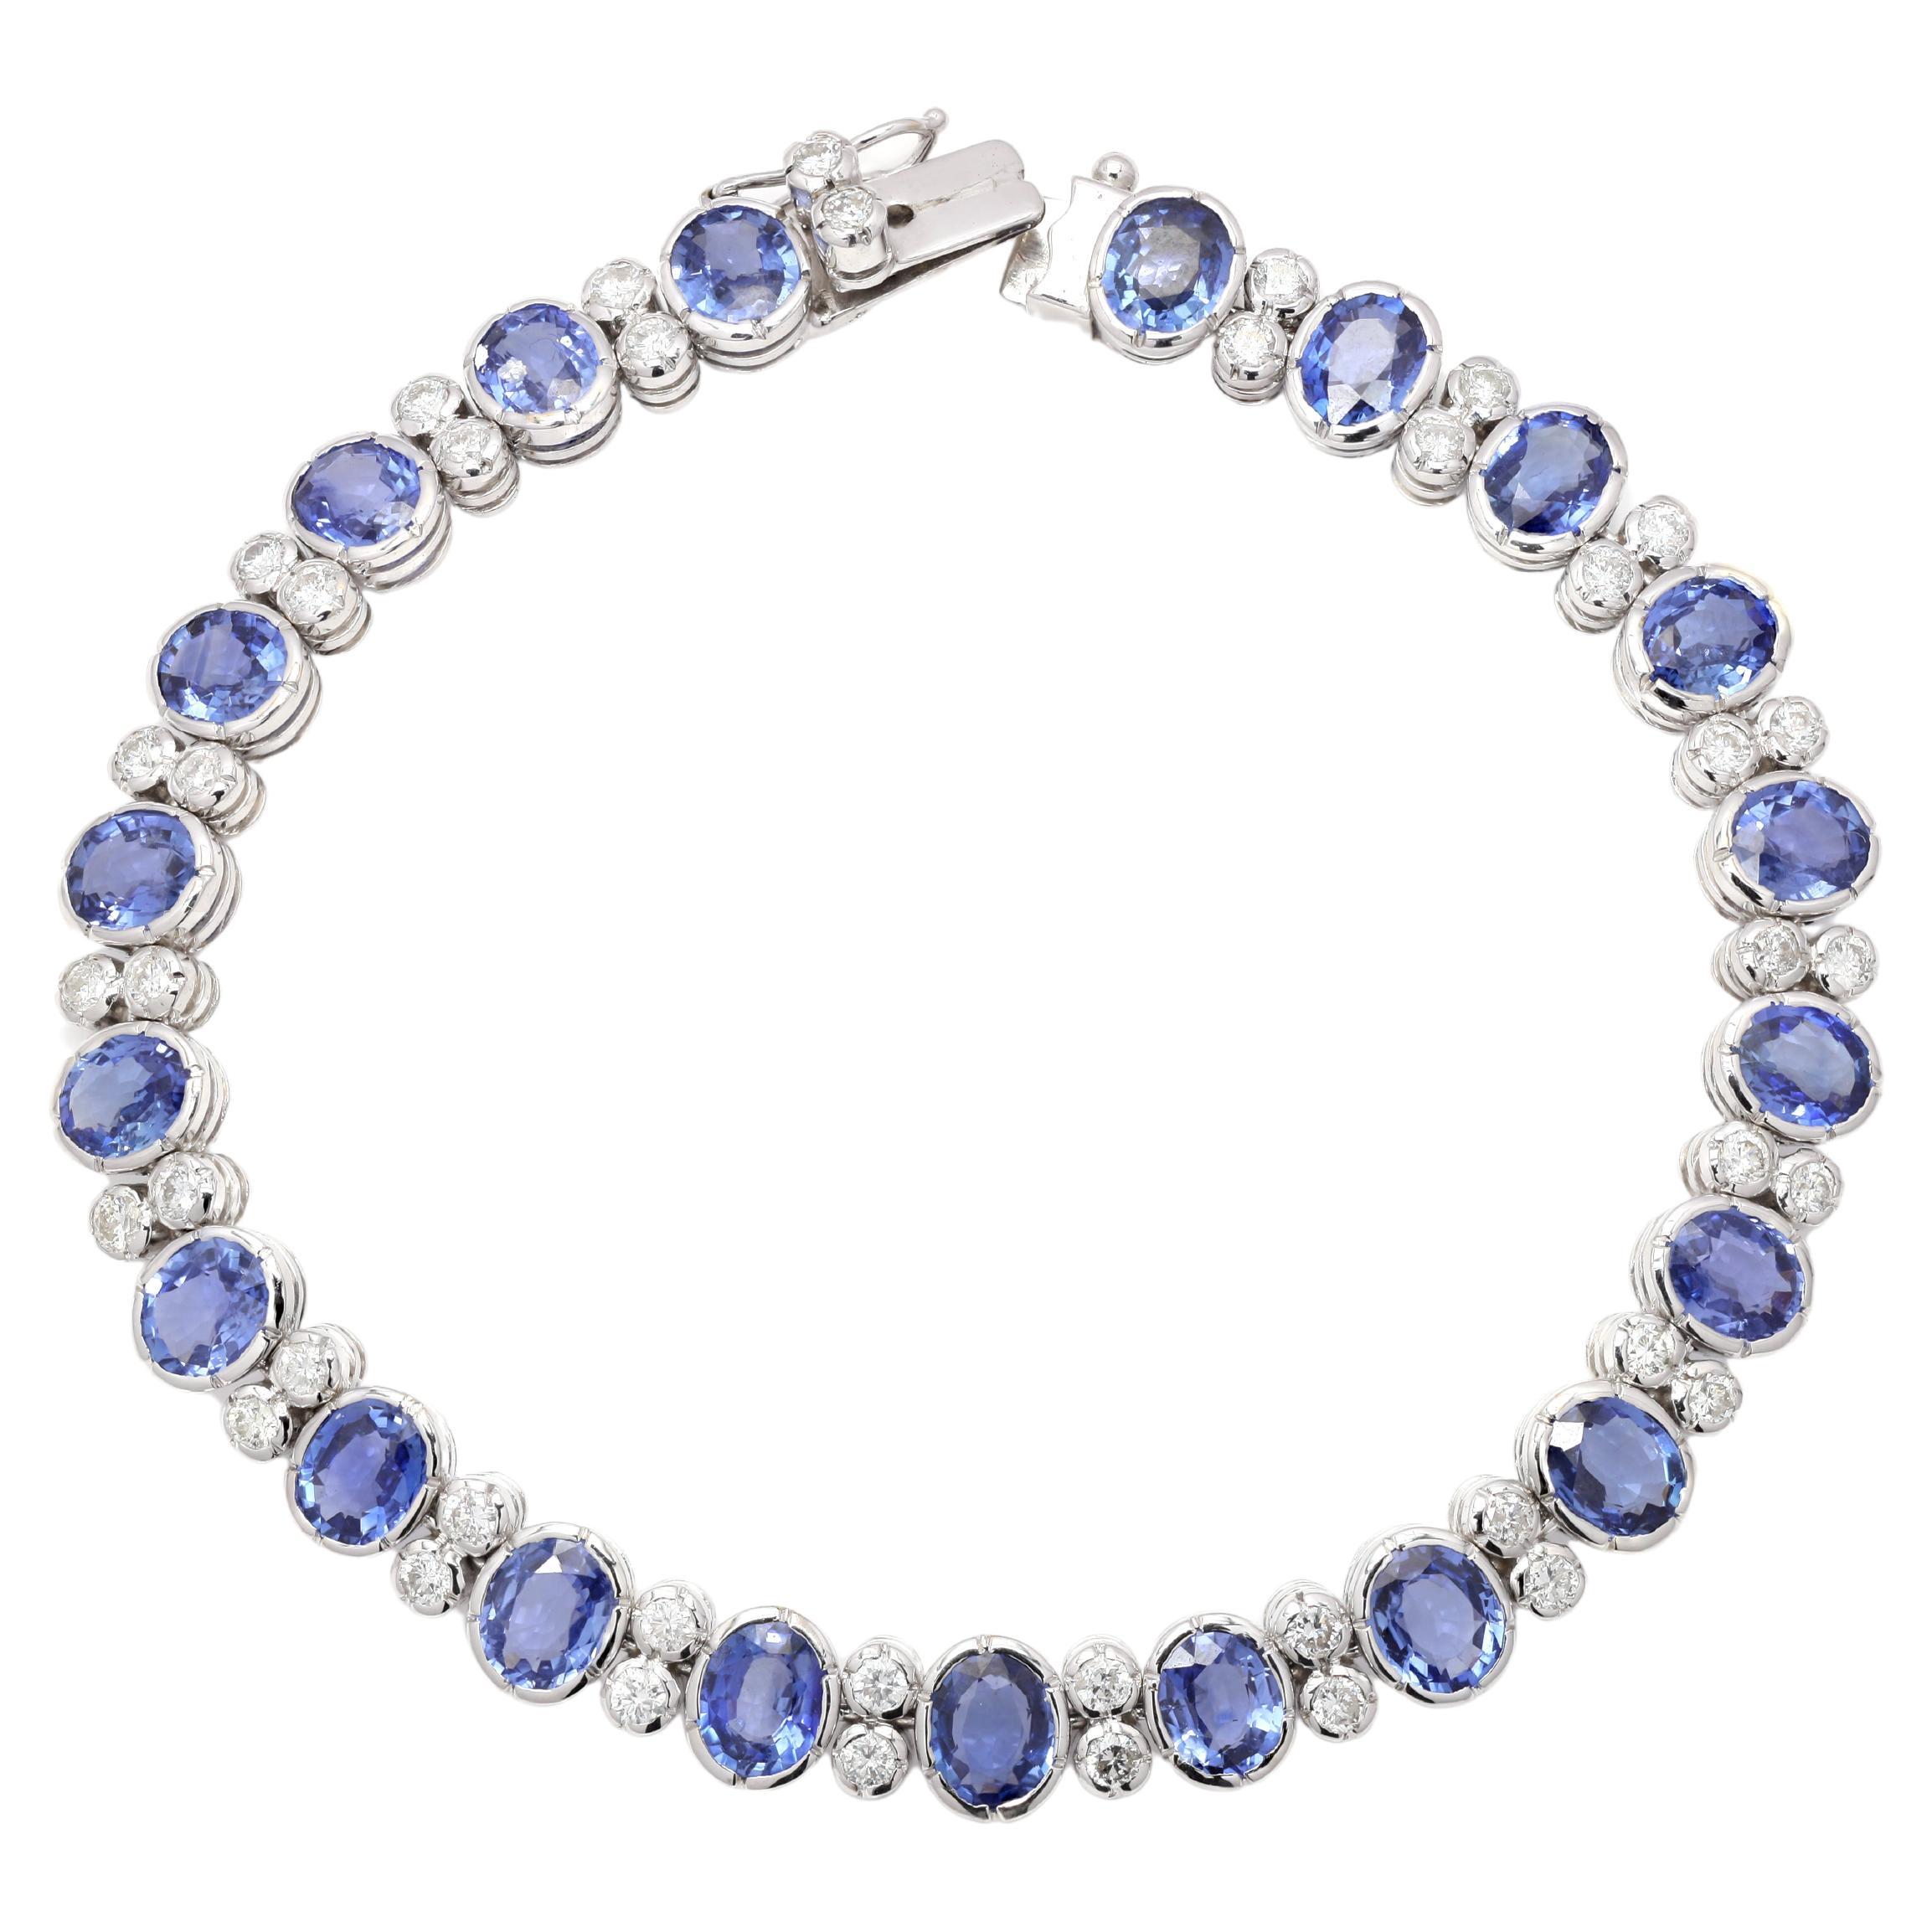 15.45 Carat Blue Sapphire Wedding Bracelet with Diamonds Inset 18K White Gold For Sale